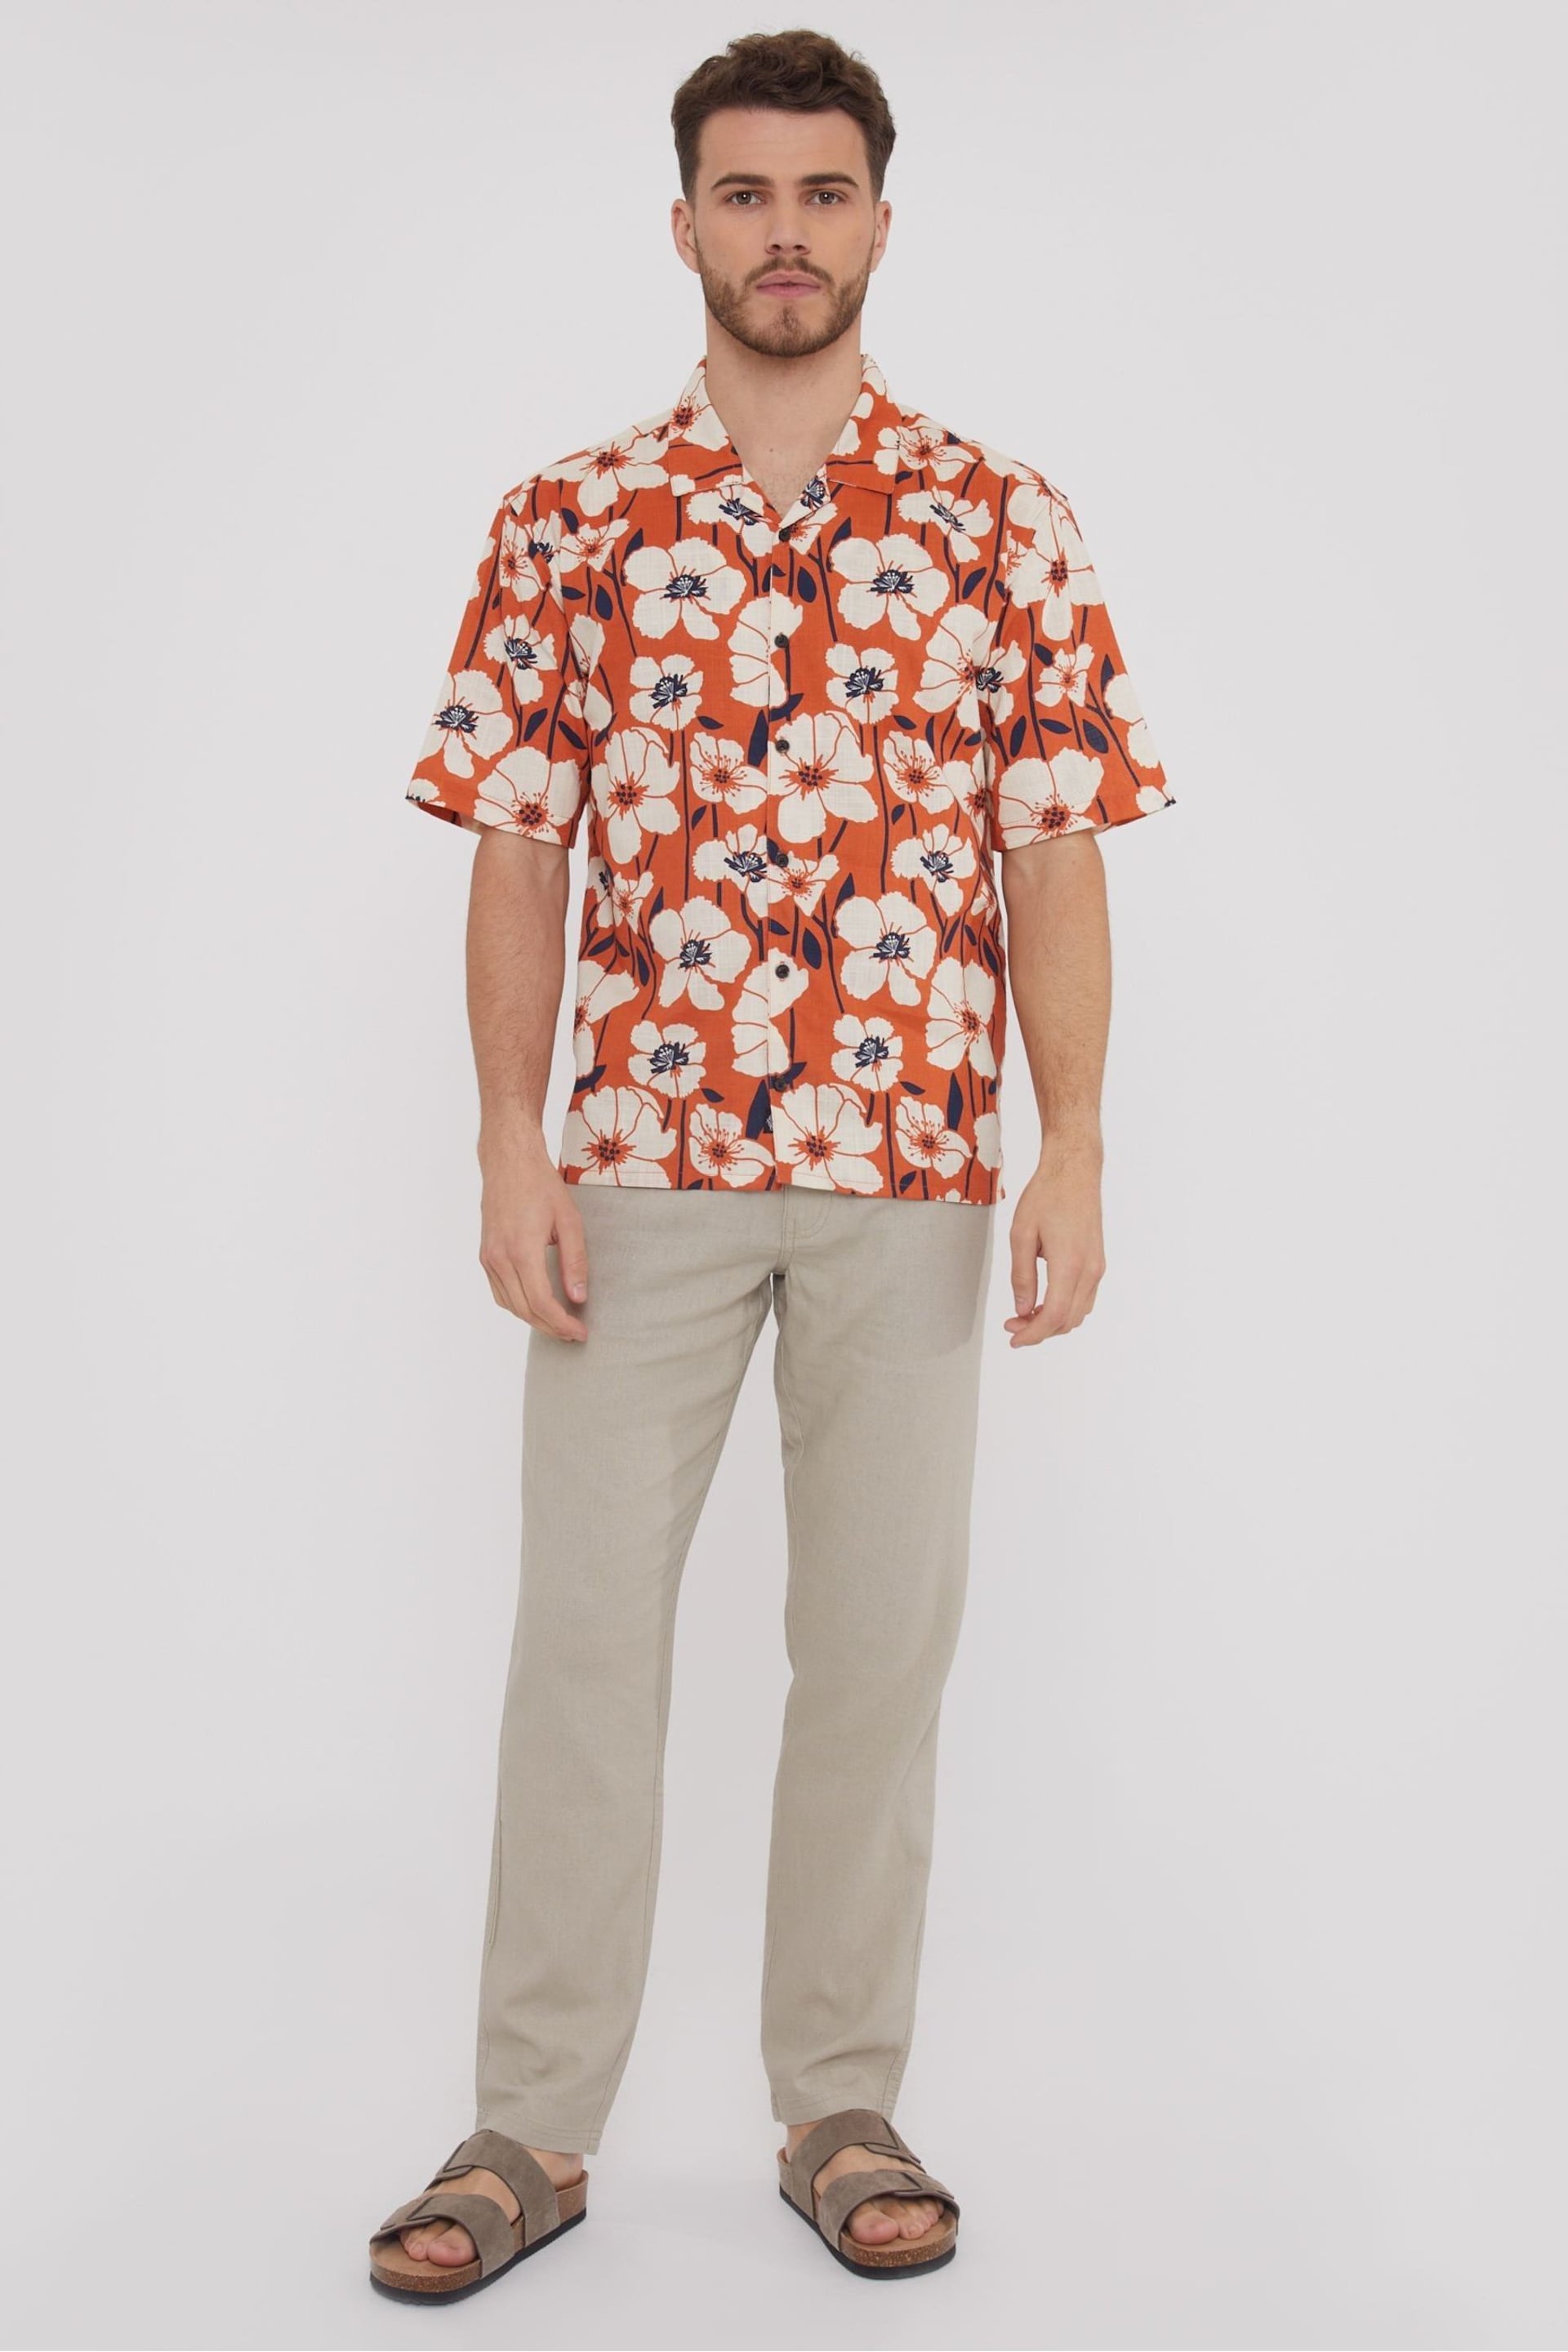 Threadbare Orange Short Sleeve Floral Print Cotton Shirt - Image 4 of 5